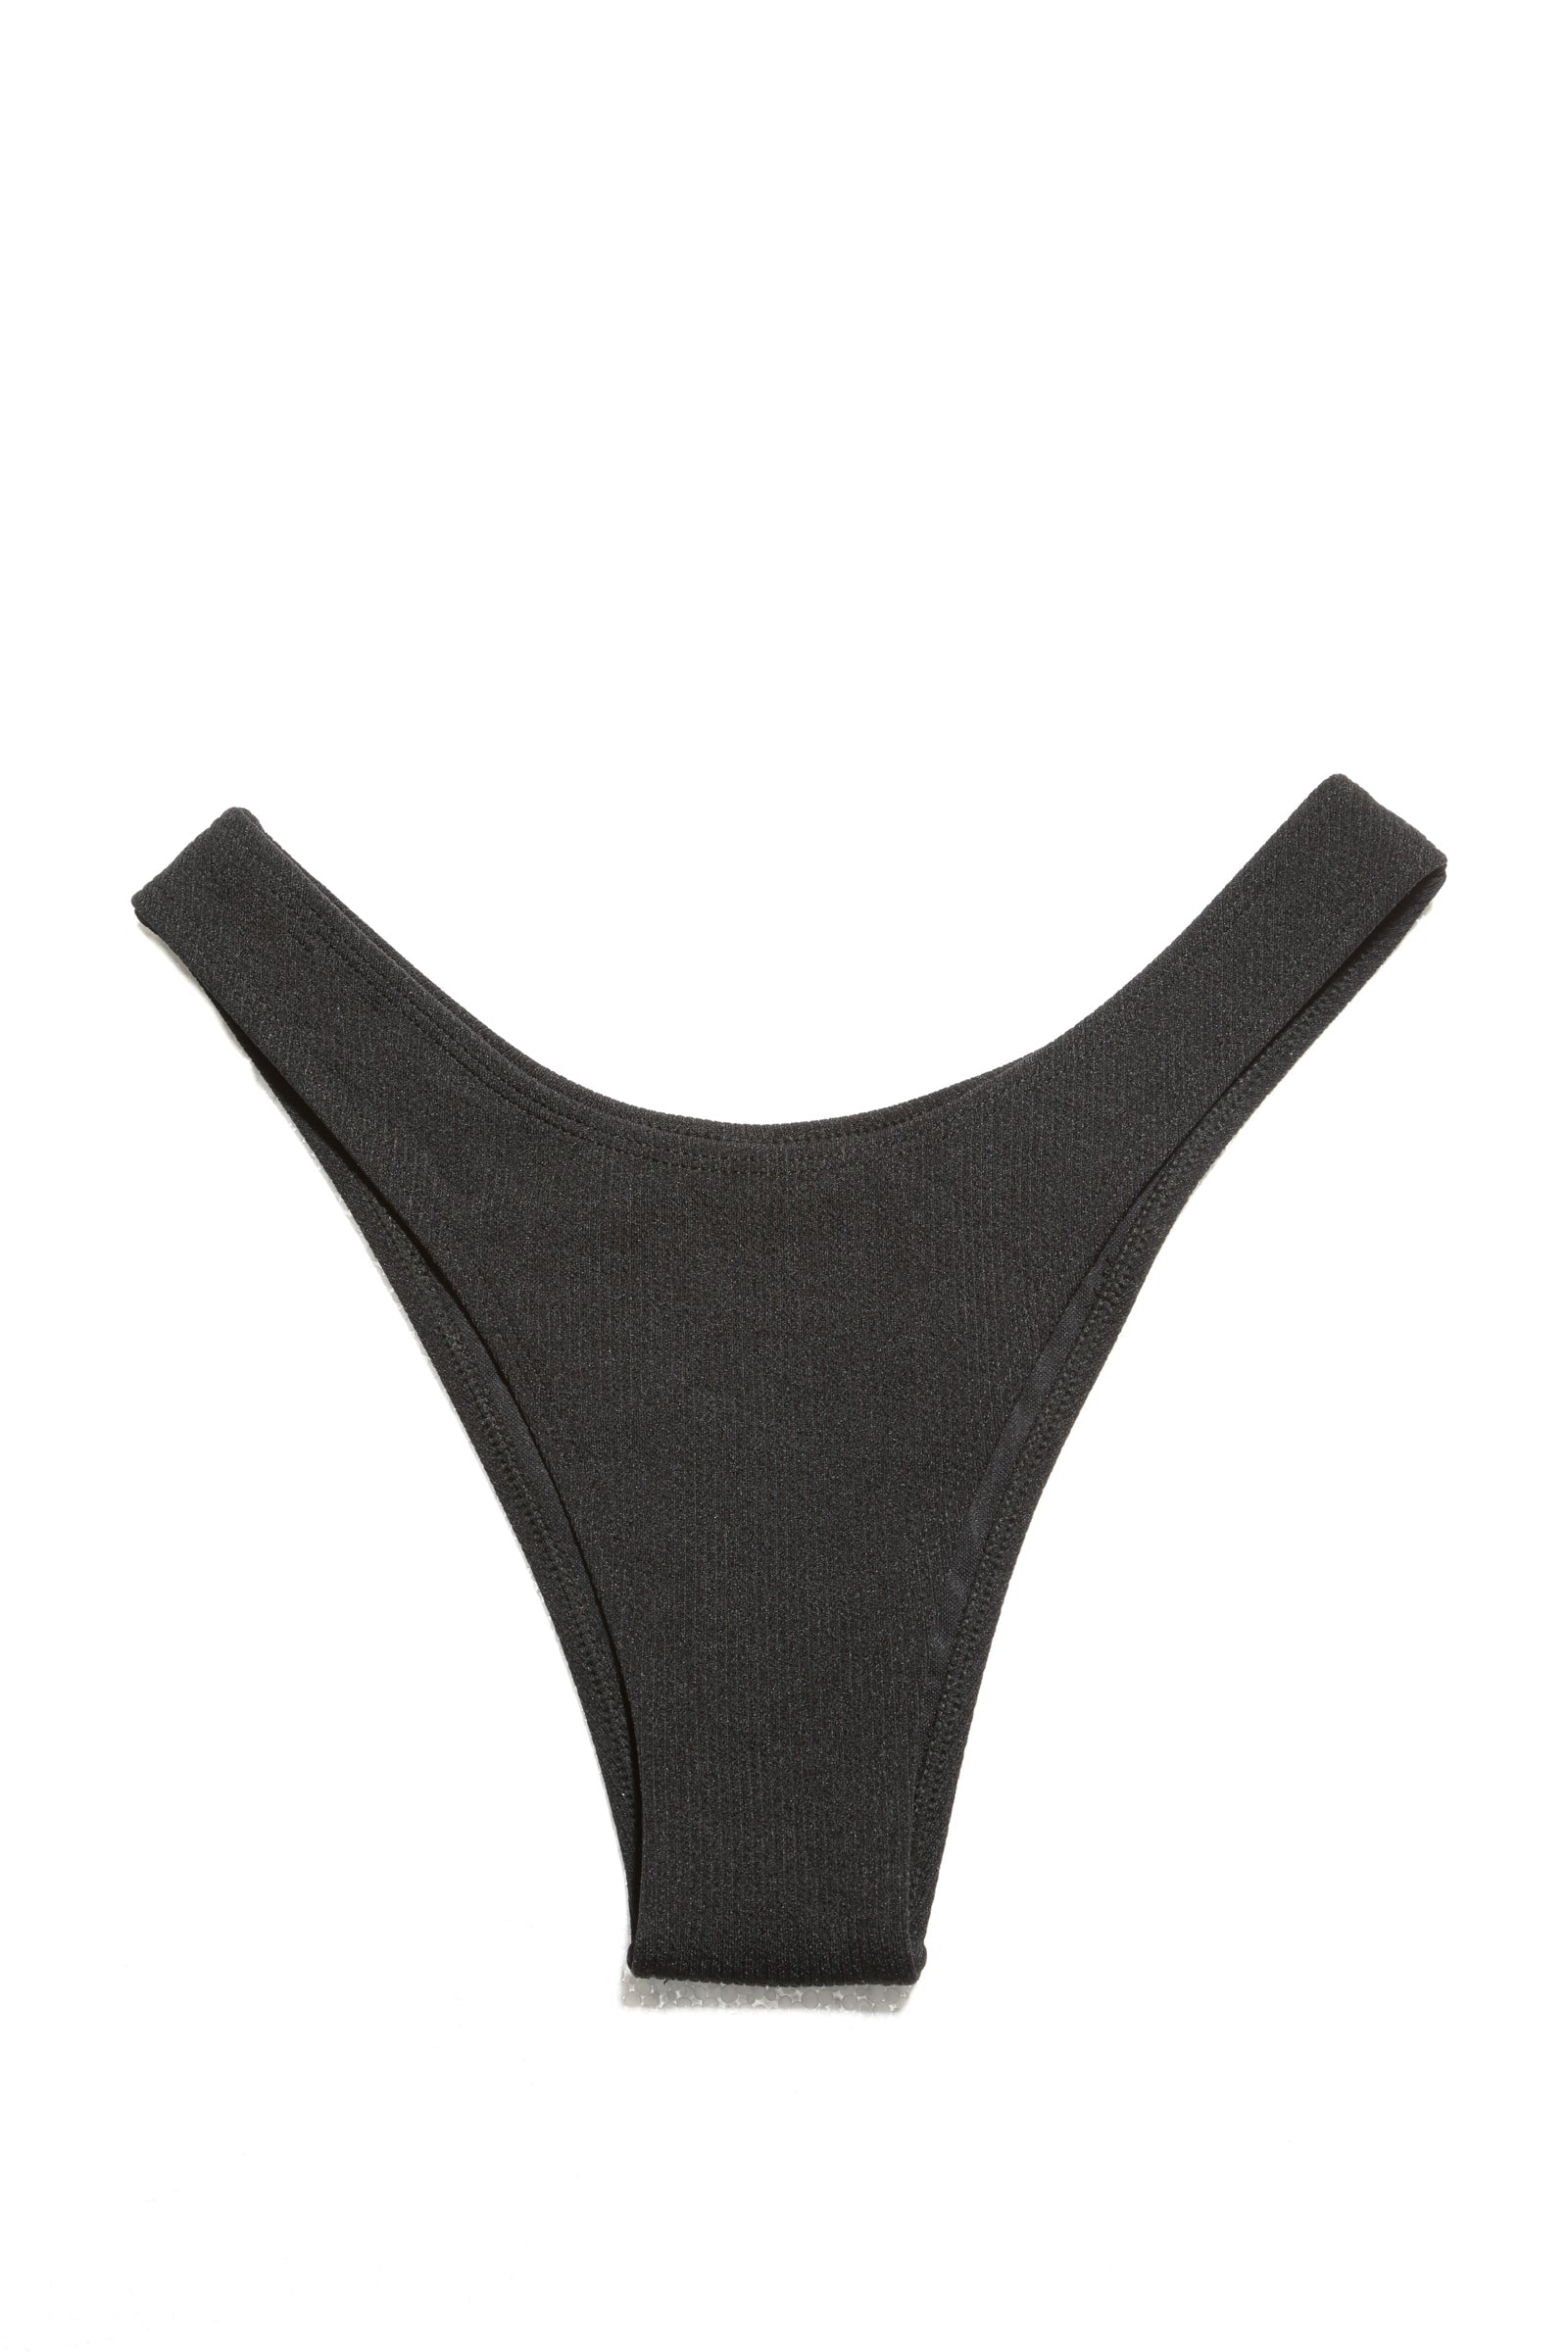 Image of Beach Bunny Ibiza Bikini Bottom -Ribbed black